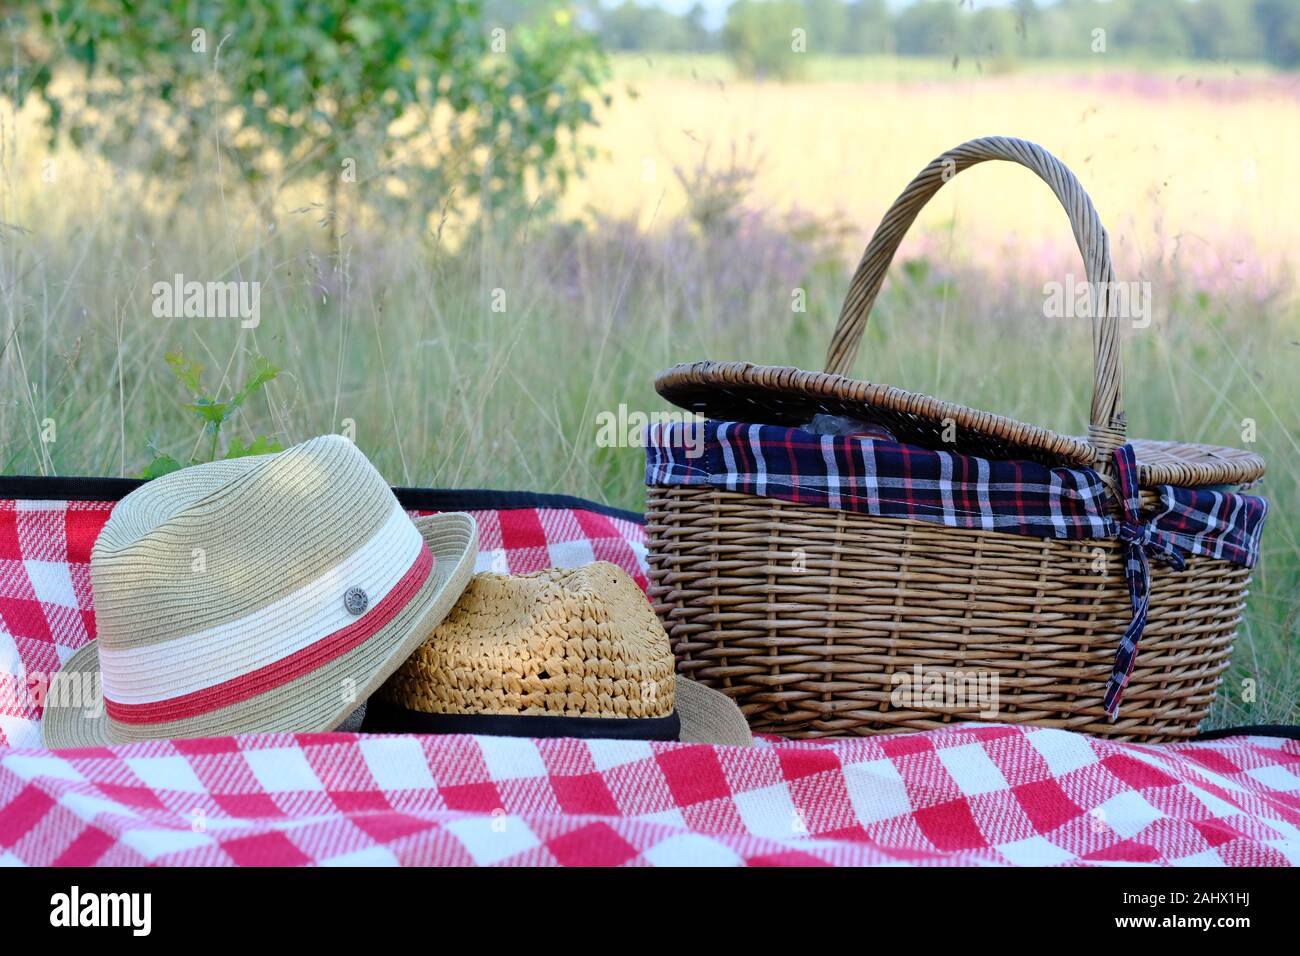 Picknick in der Lüneburger Heide Foto Stock